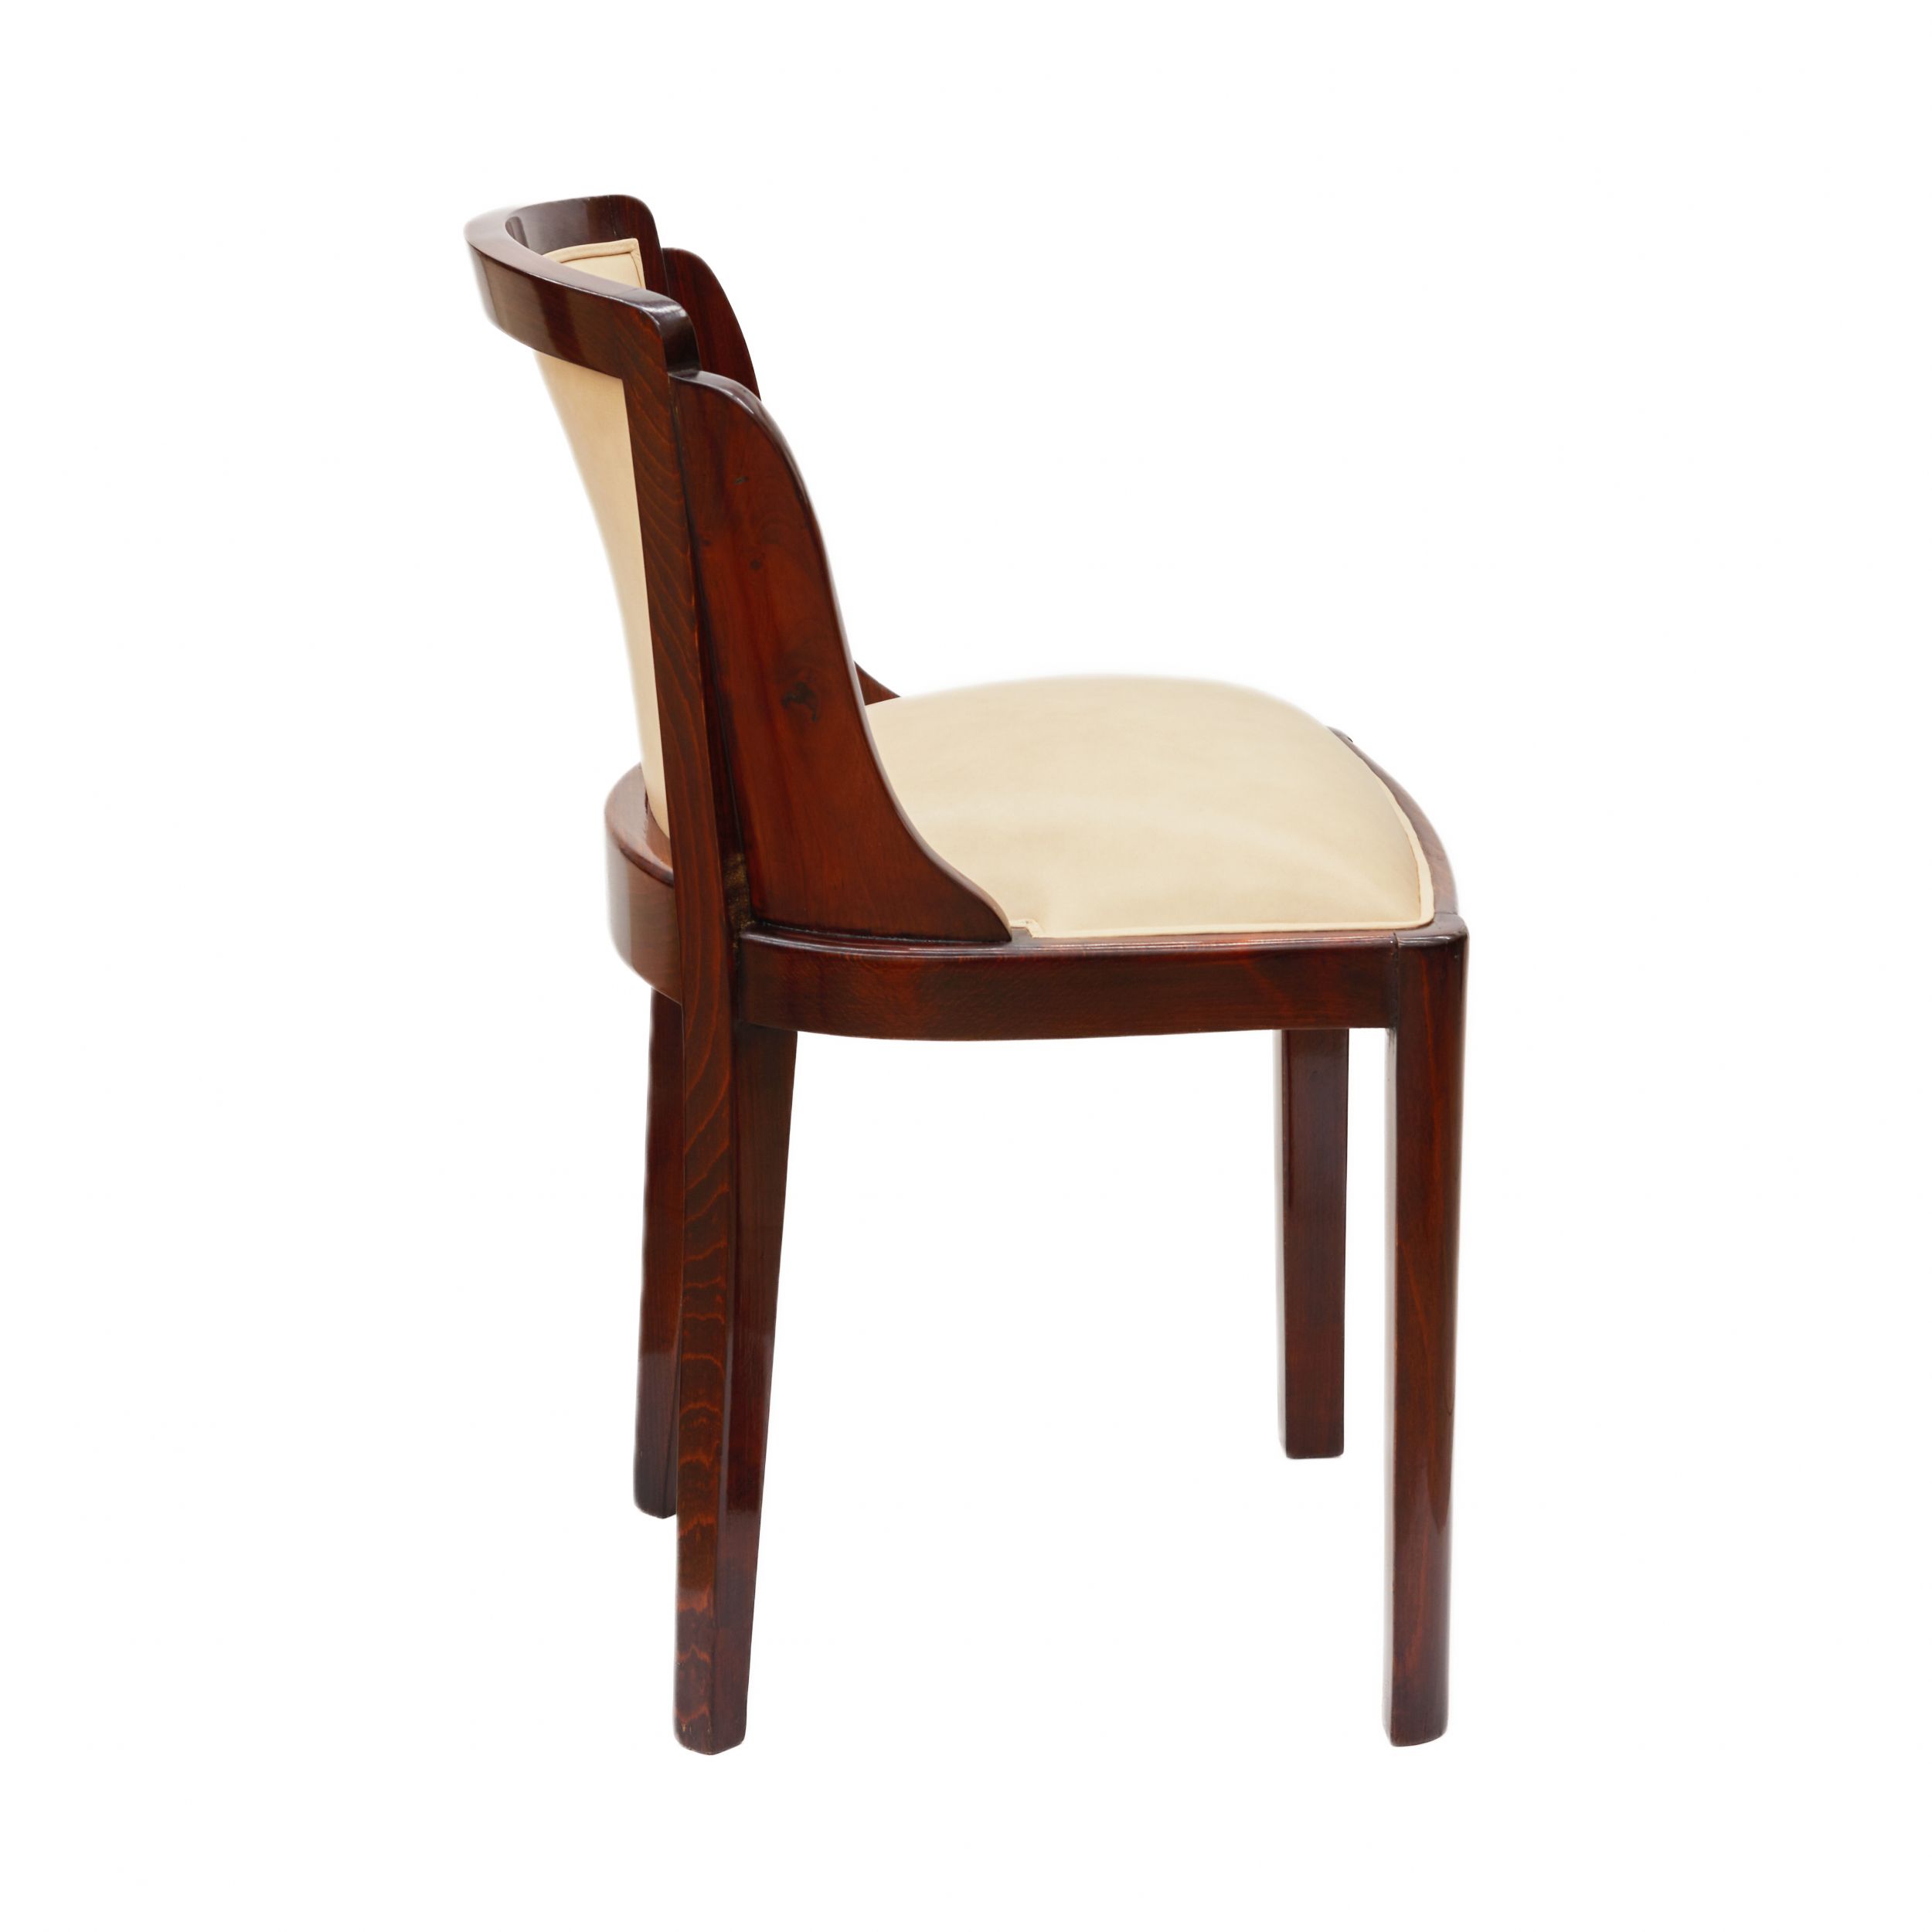 Vittorio Dassi. Grandiose furniture set in Art Deco style. - Image 11 of 11